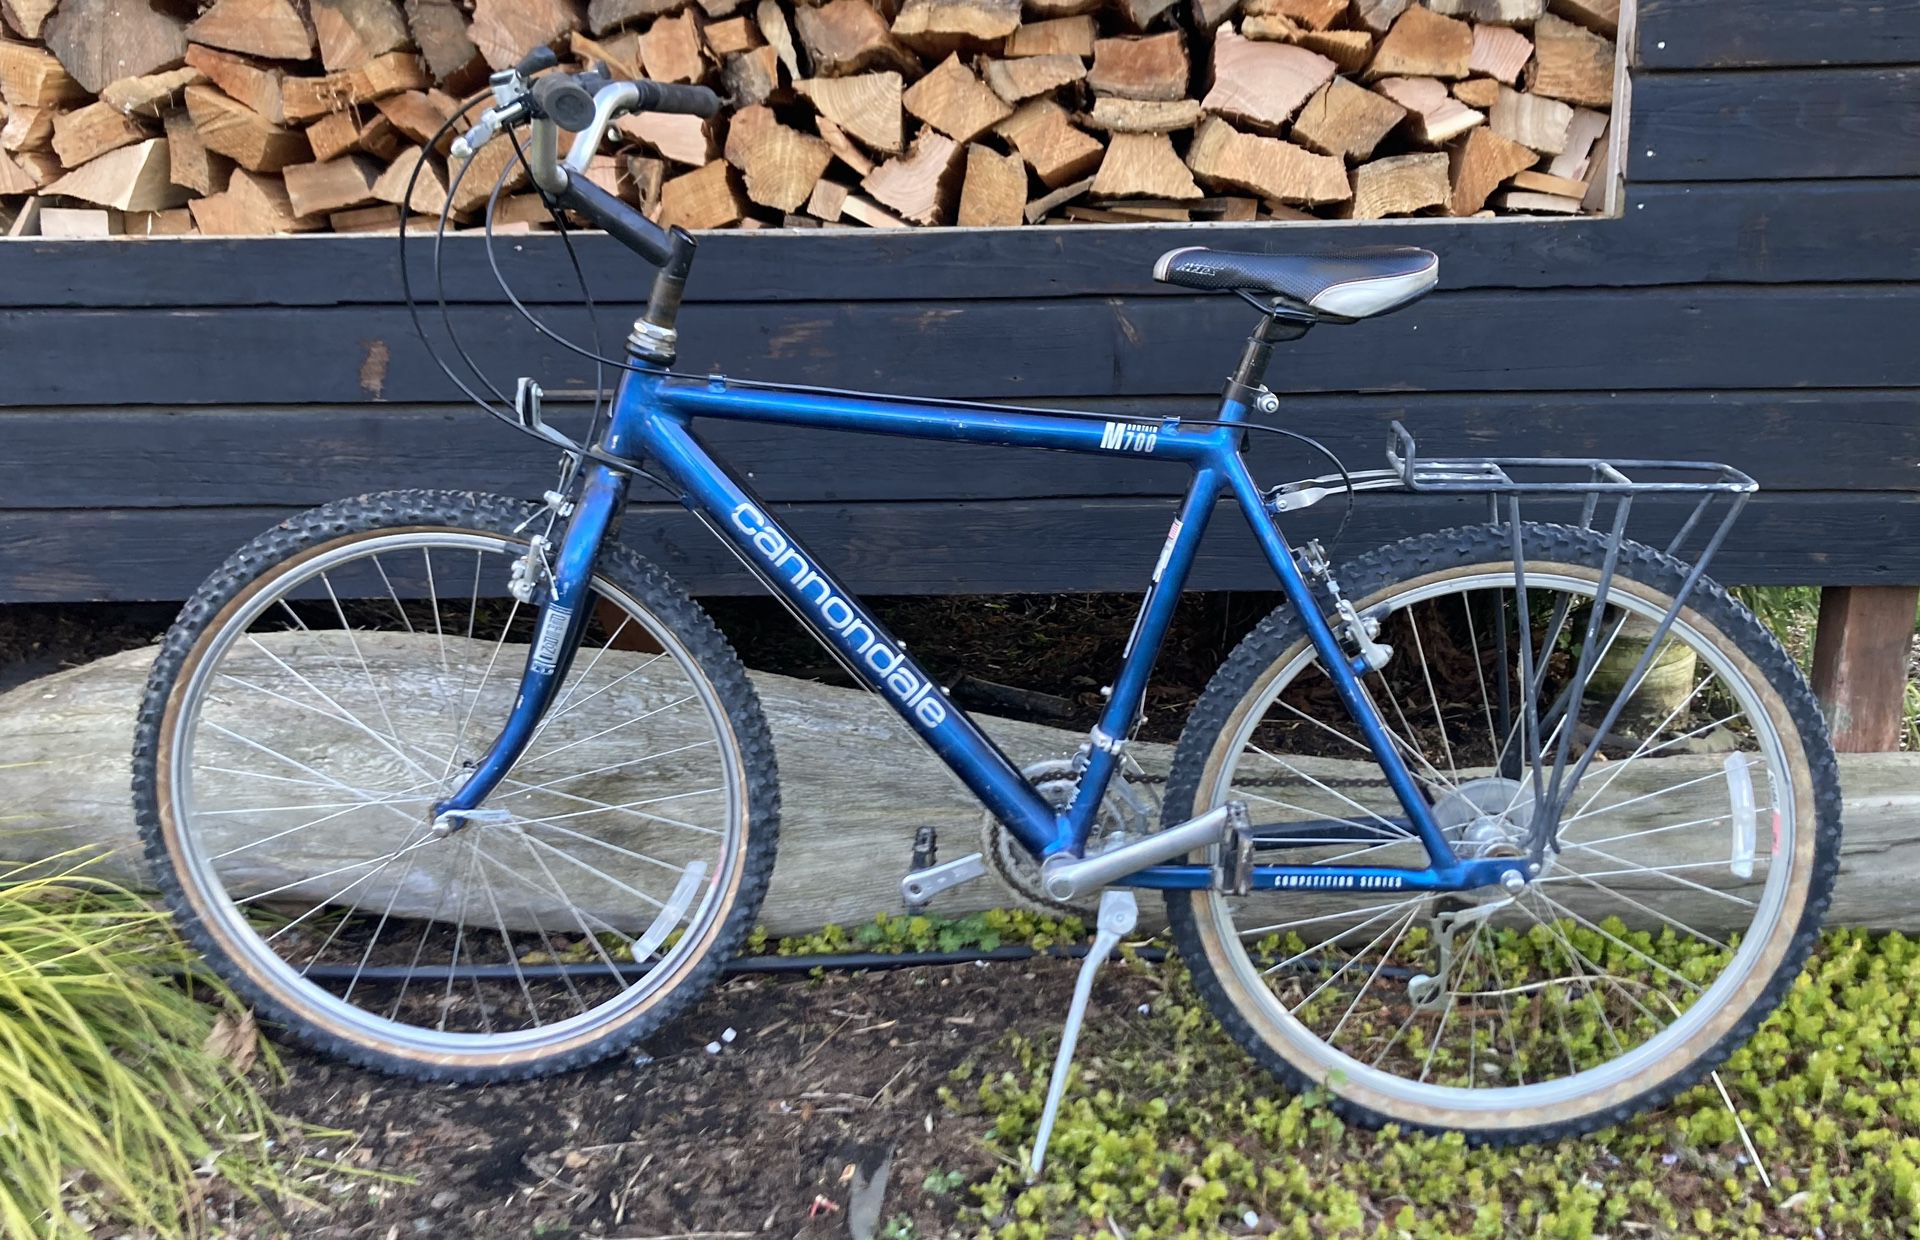 Cannondale M700 Bike